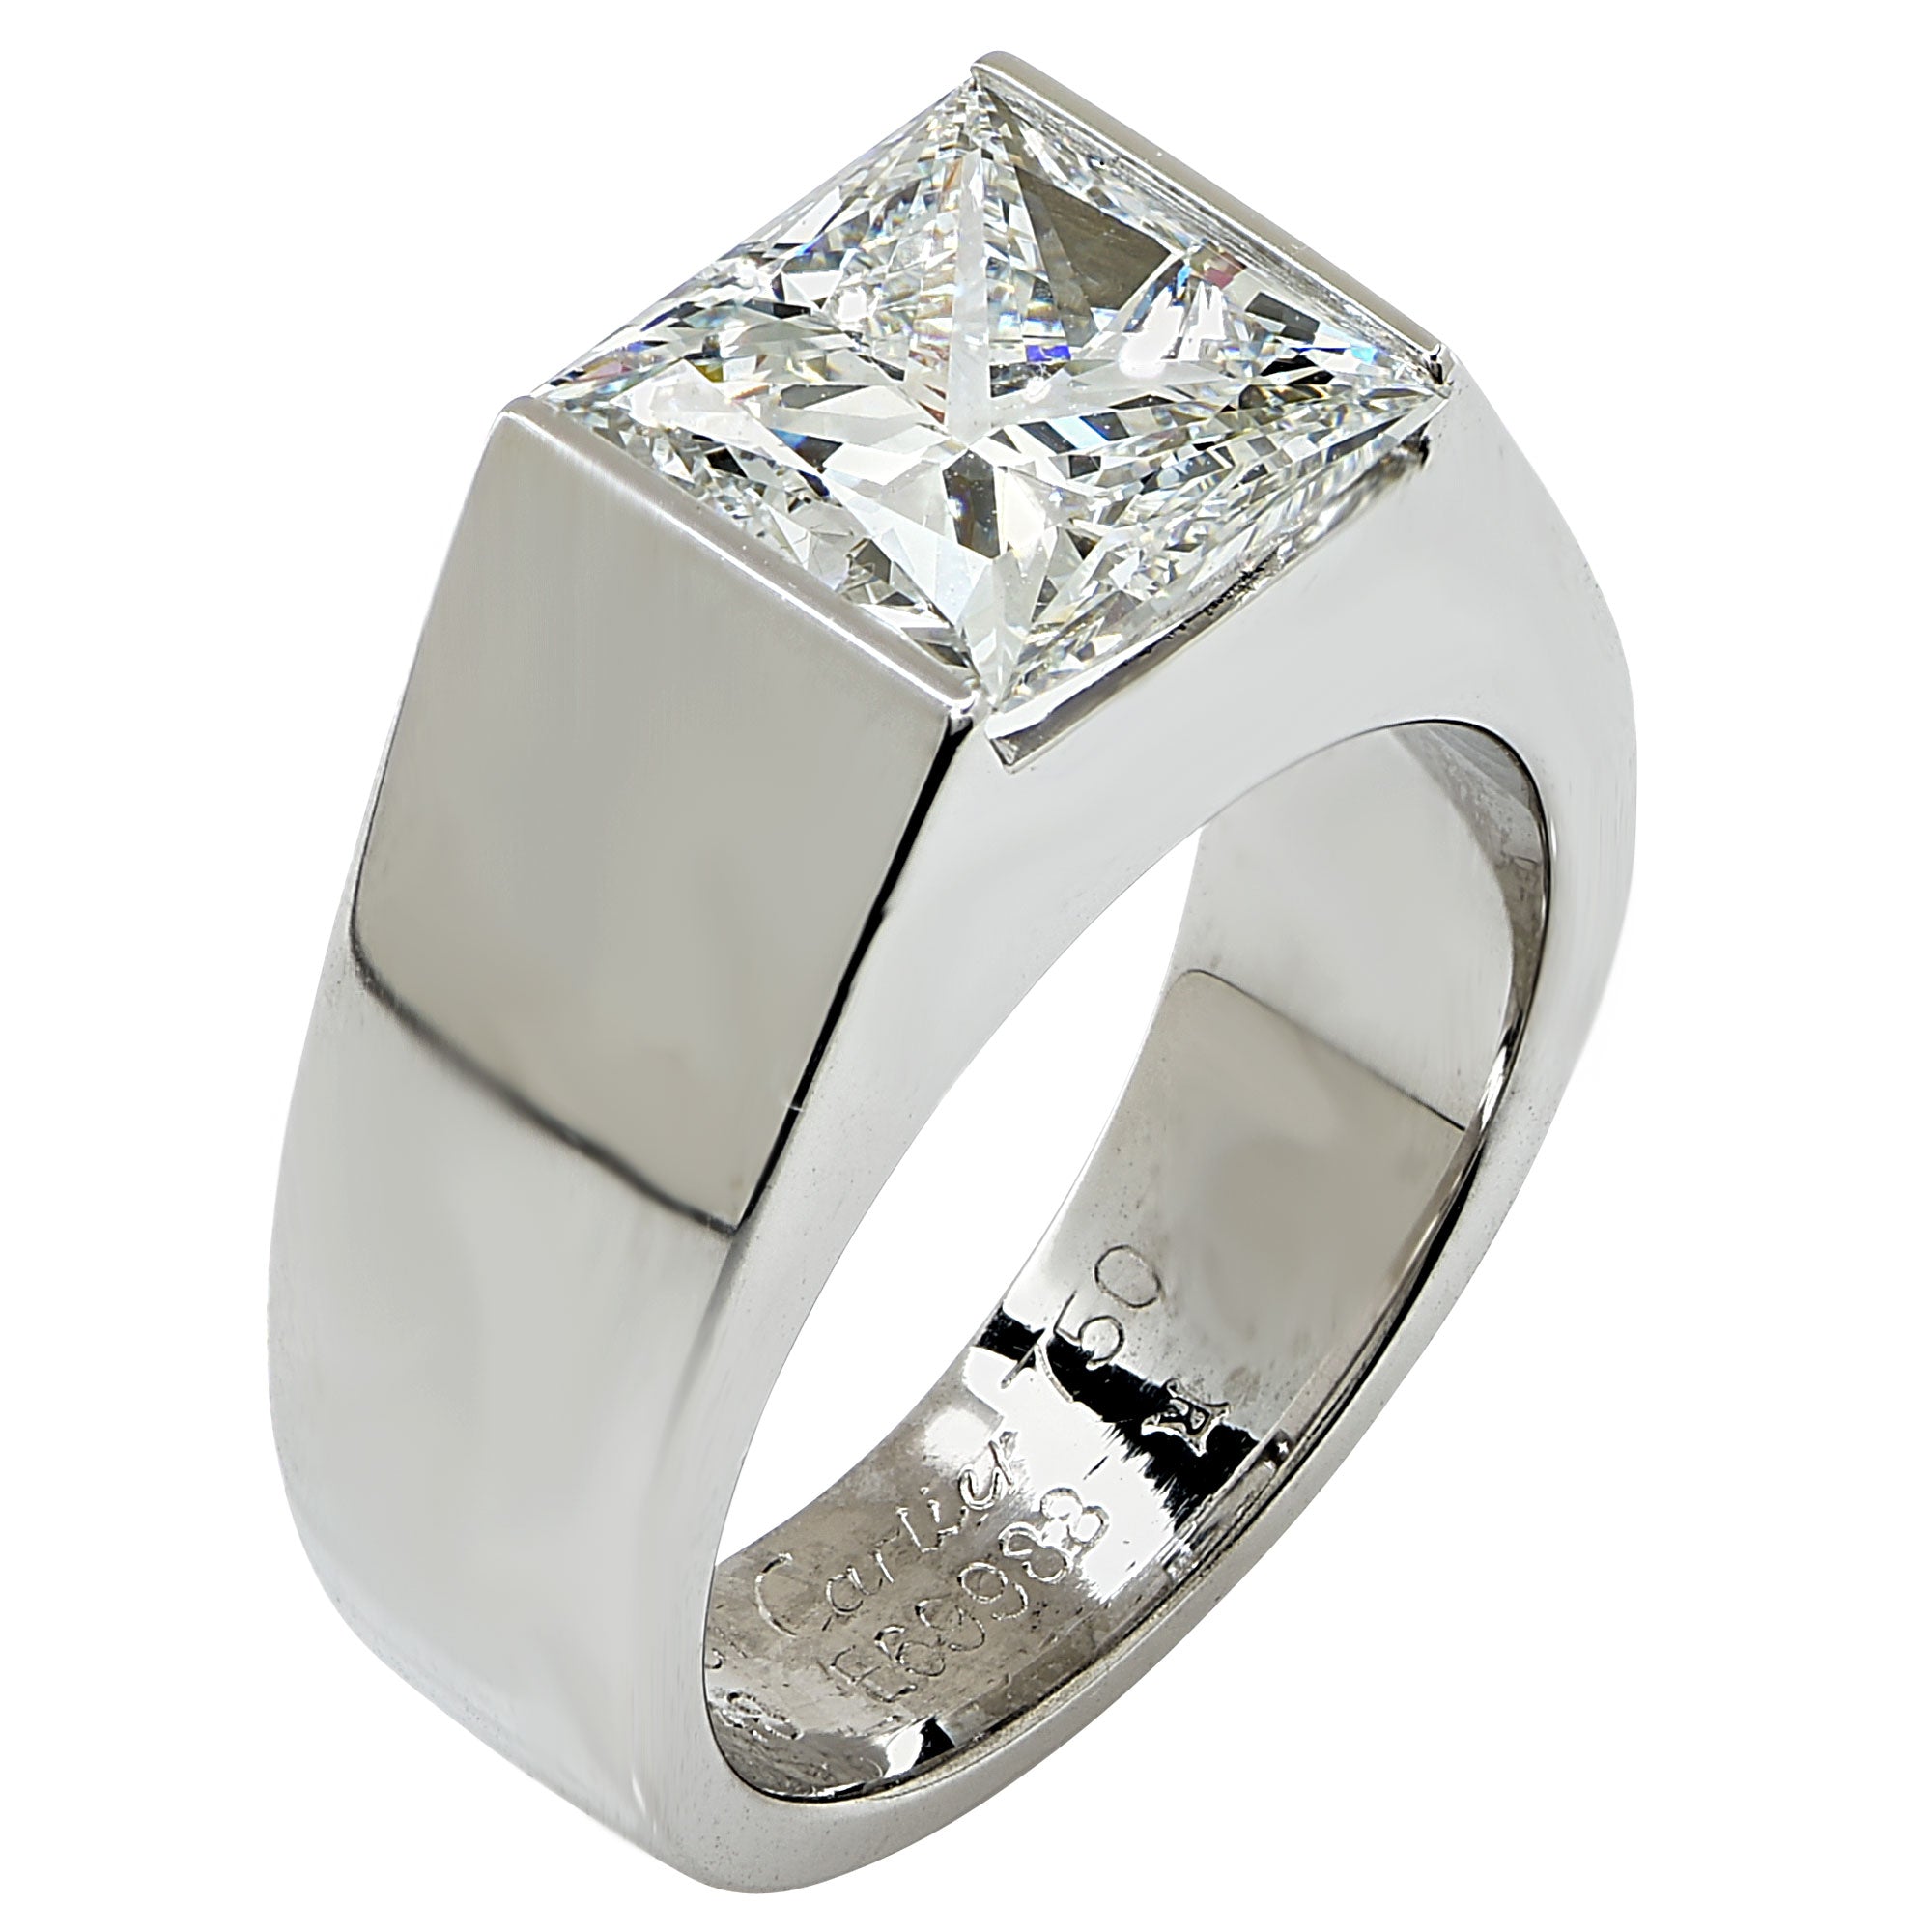 Cartier engagement ring | Huge diamond rings, Dream engagement rings, Cartier  diamond rings